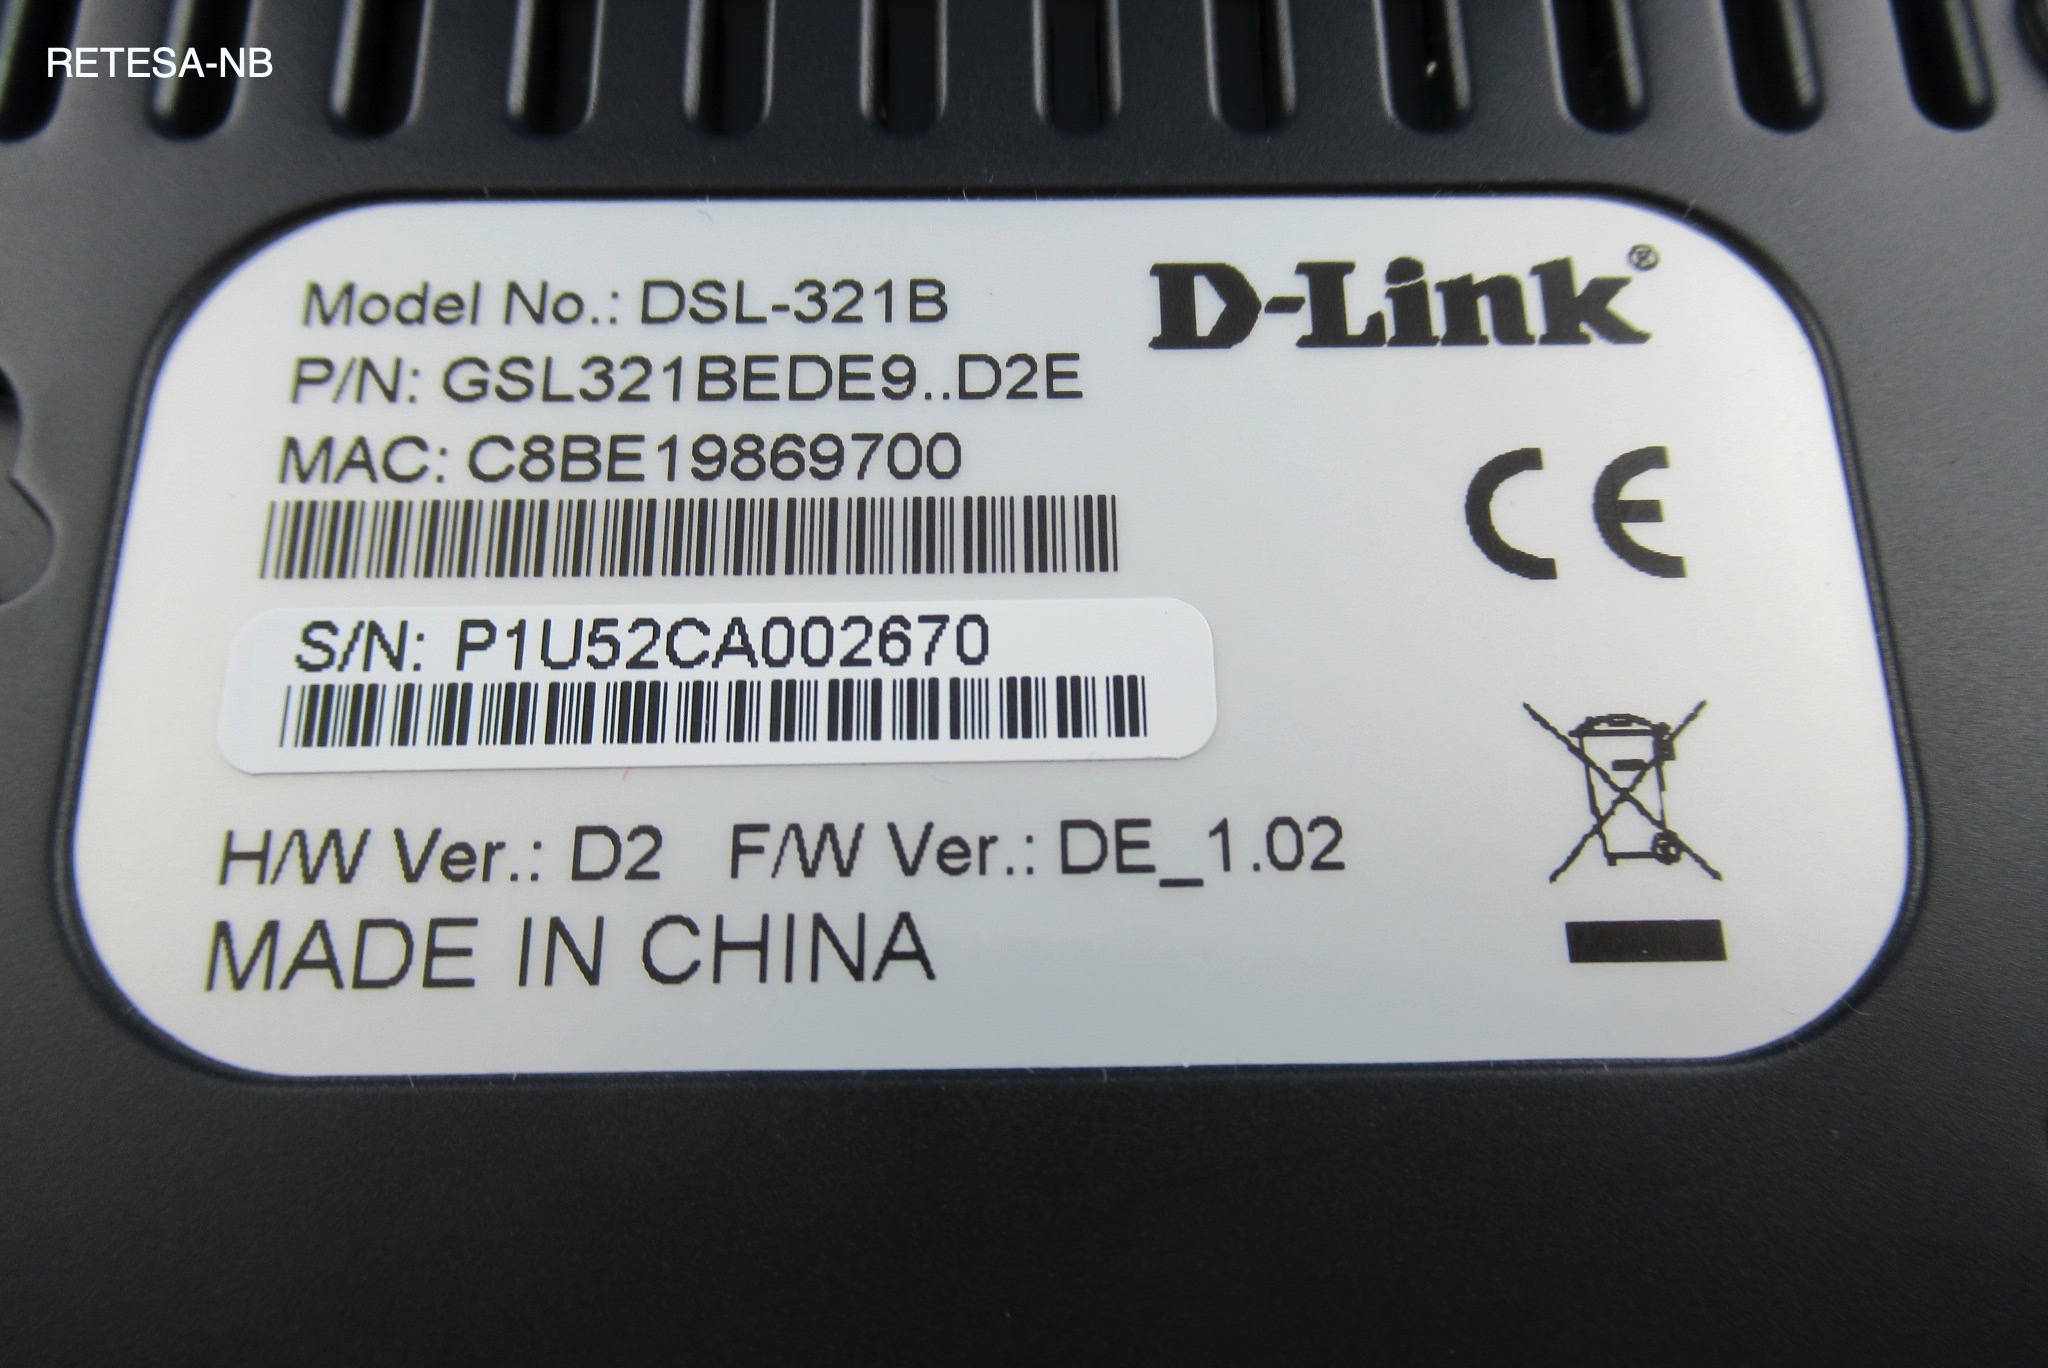 D-Link ADSL2+-MODEM DSL-321B/EU